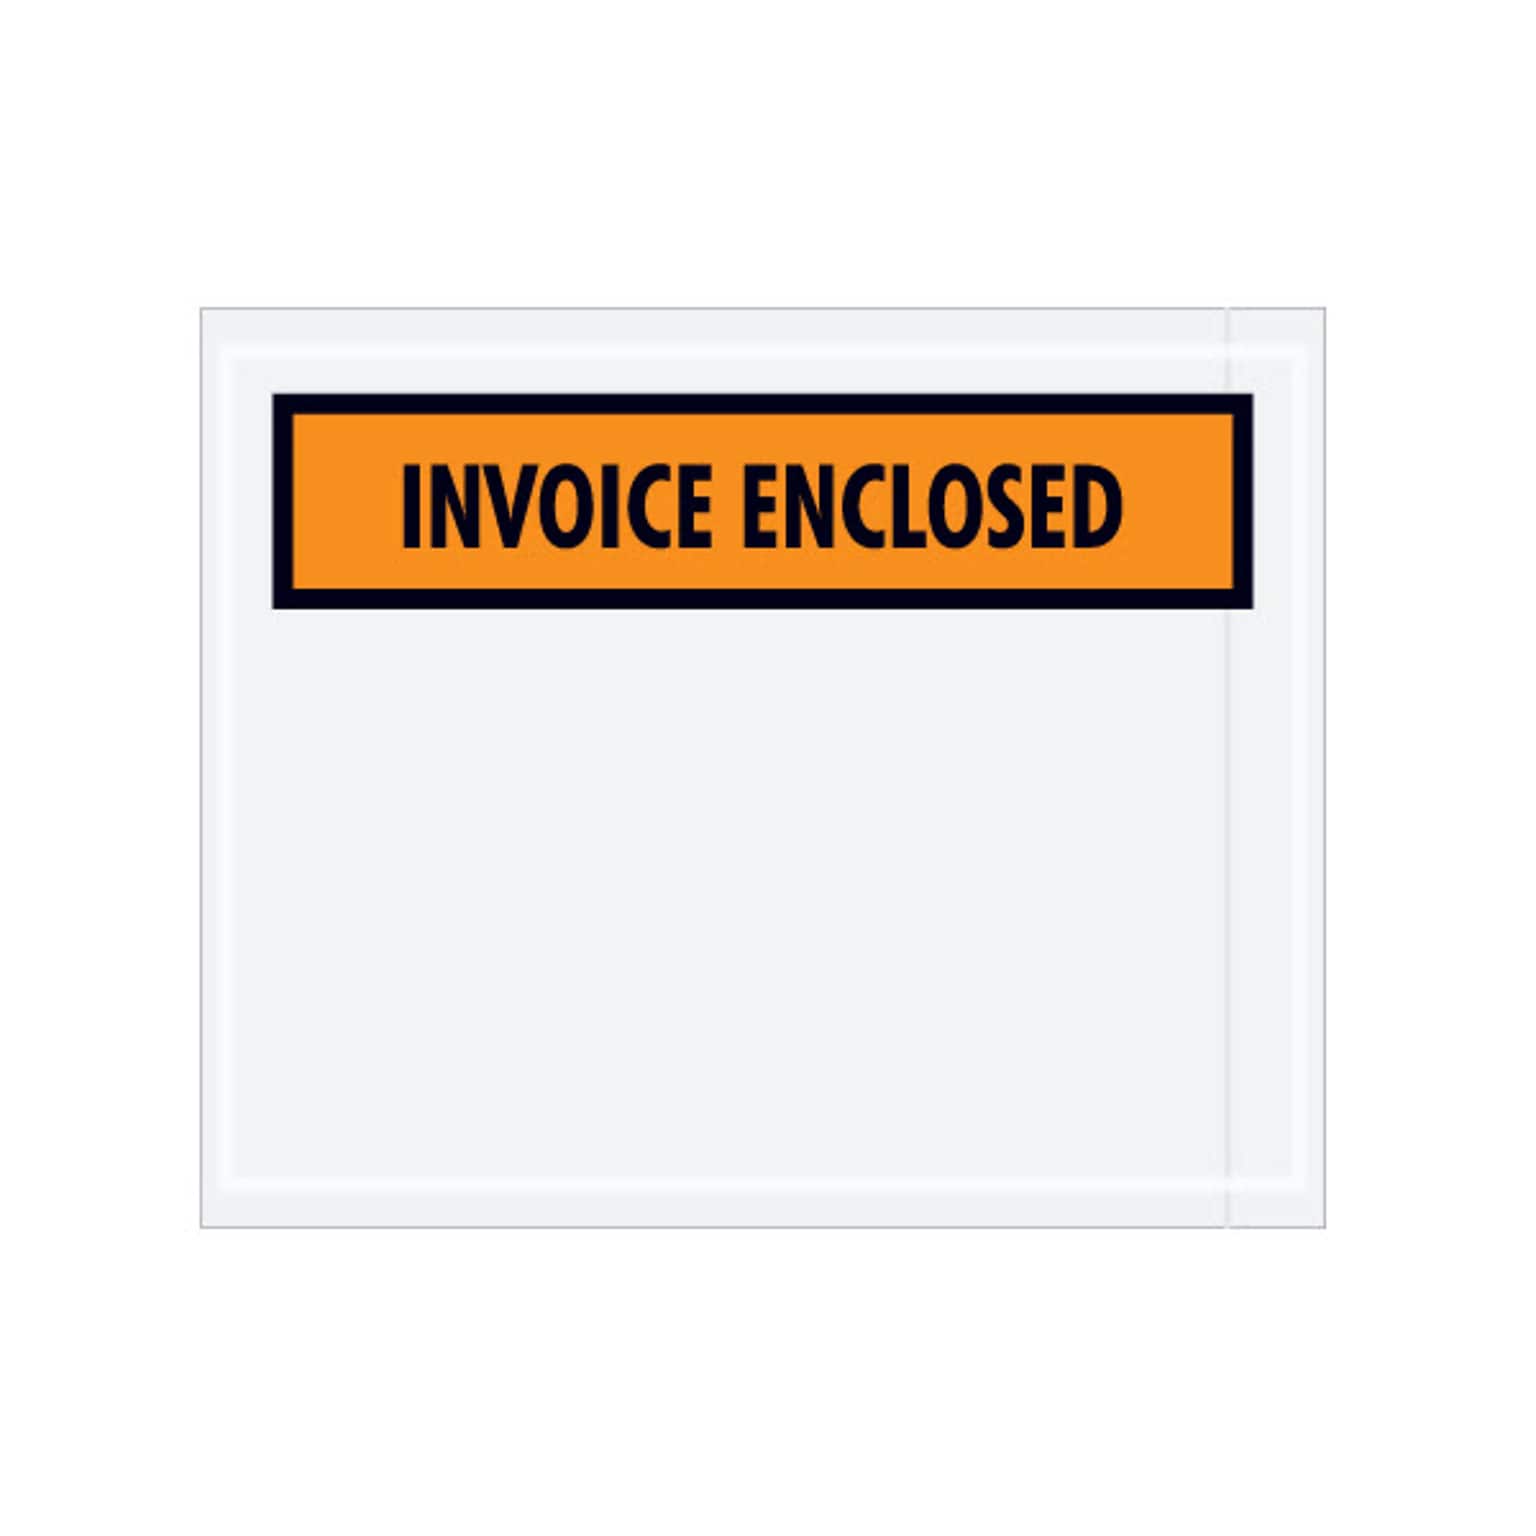 Packing List Envelopes, 4-1/2 x 5-1/2, Orange Panel Face Invoice Enclosed, 1000/Case